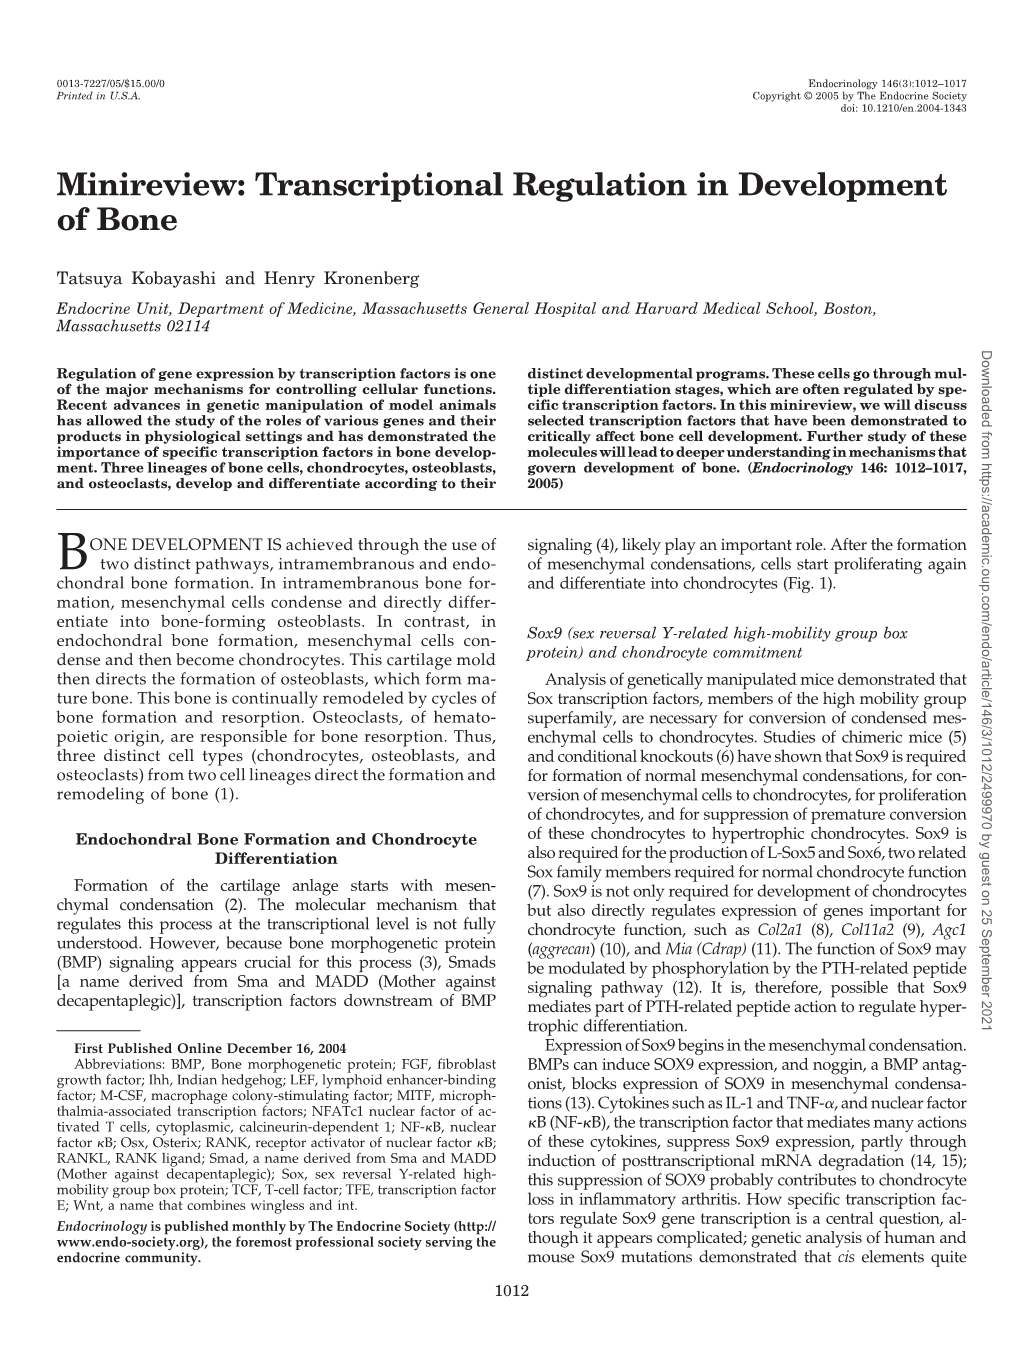 Minireview: Transcriptional Regulation in Development of Bone